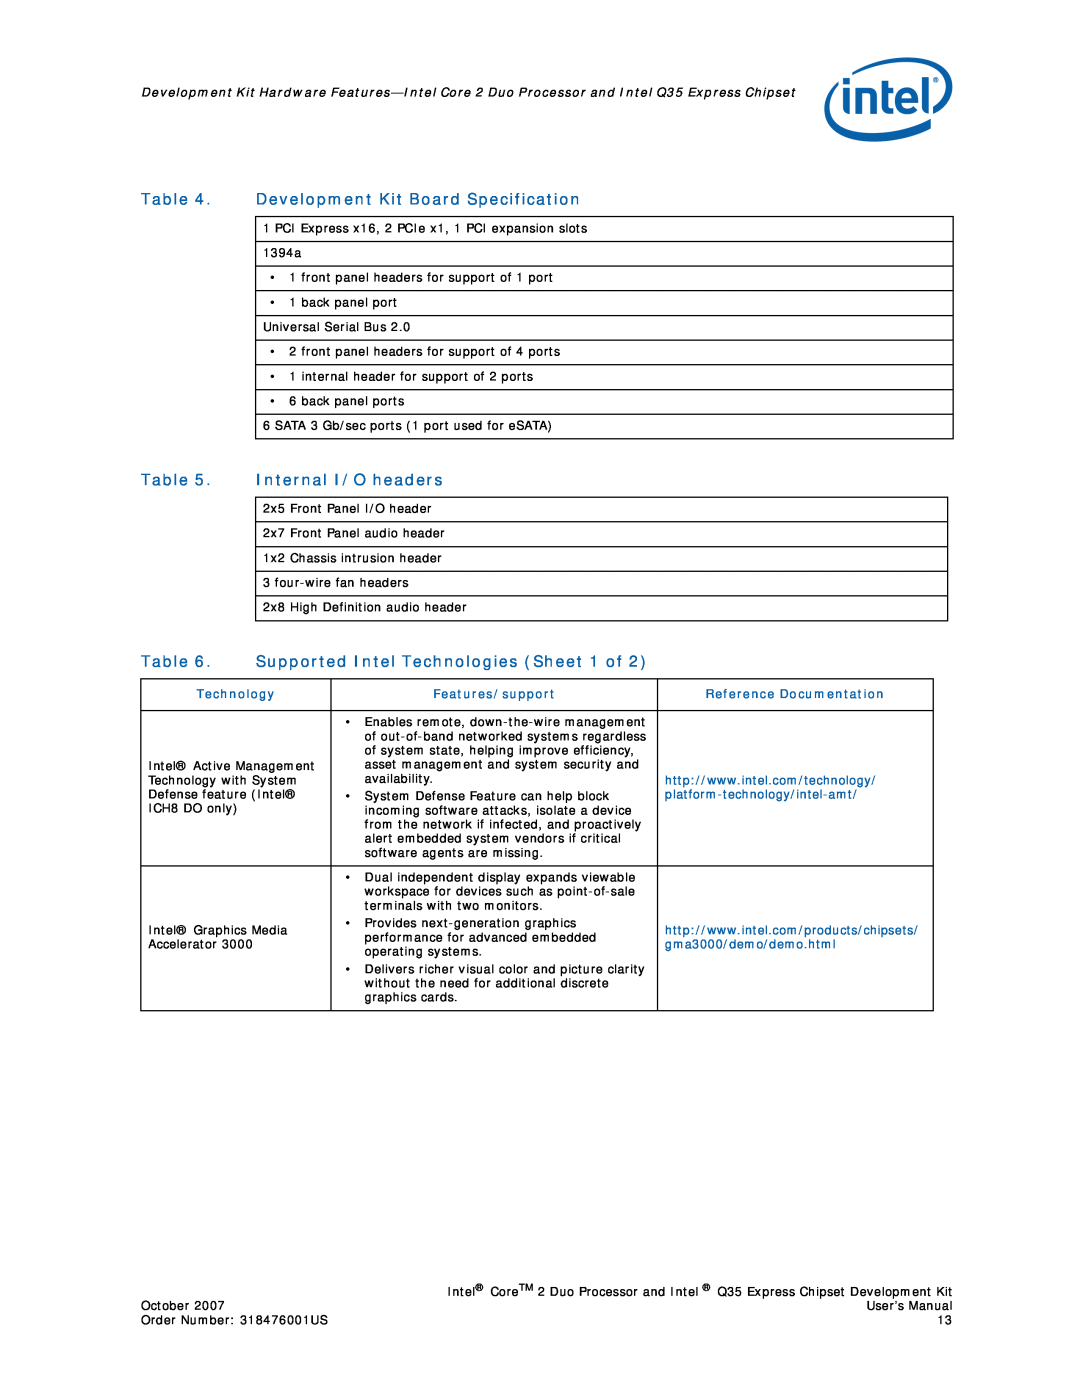 Intel Q35 Express Development Kit Board Specification, Internal I/O headers, Supported Intel Technologies Sheet 1 of 